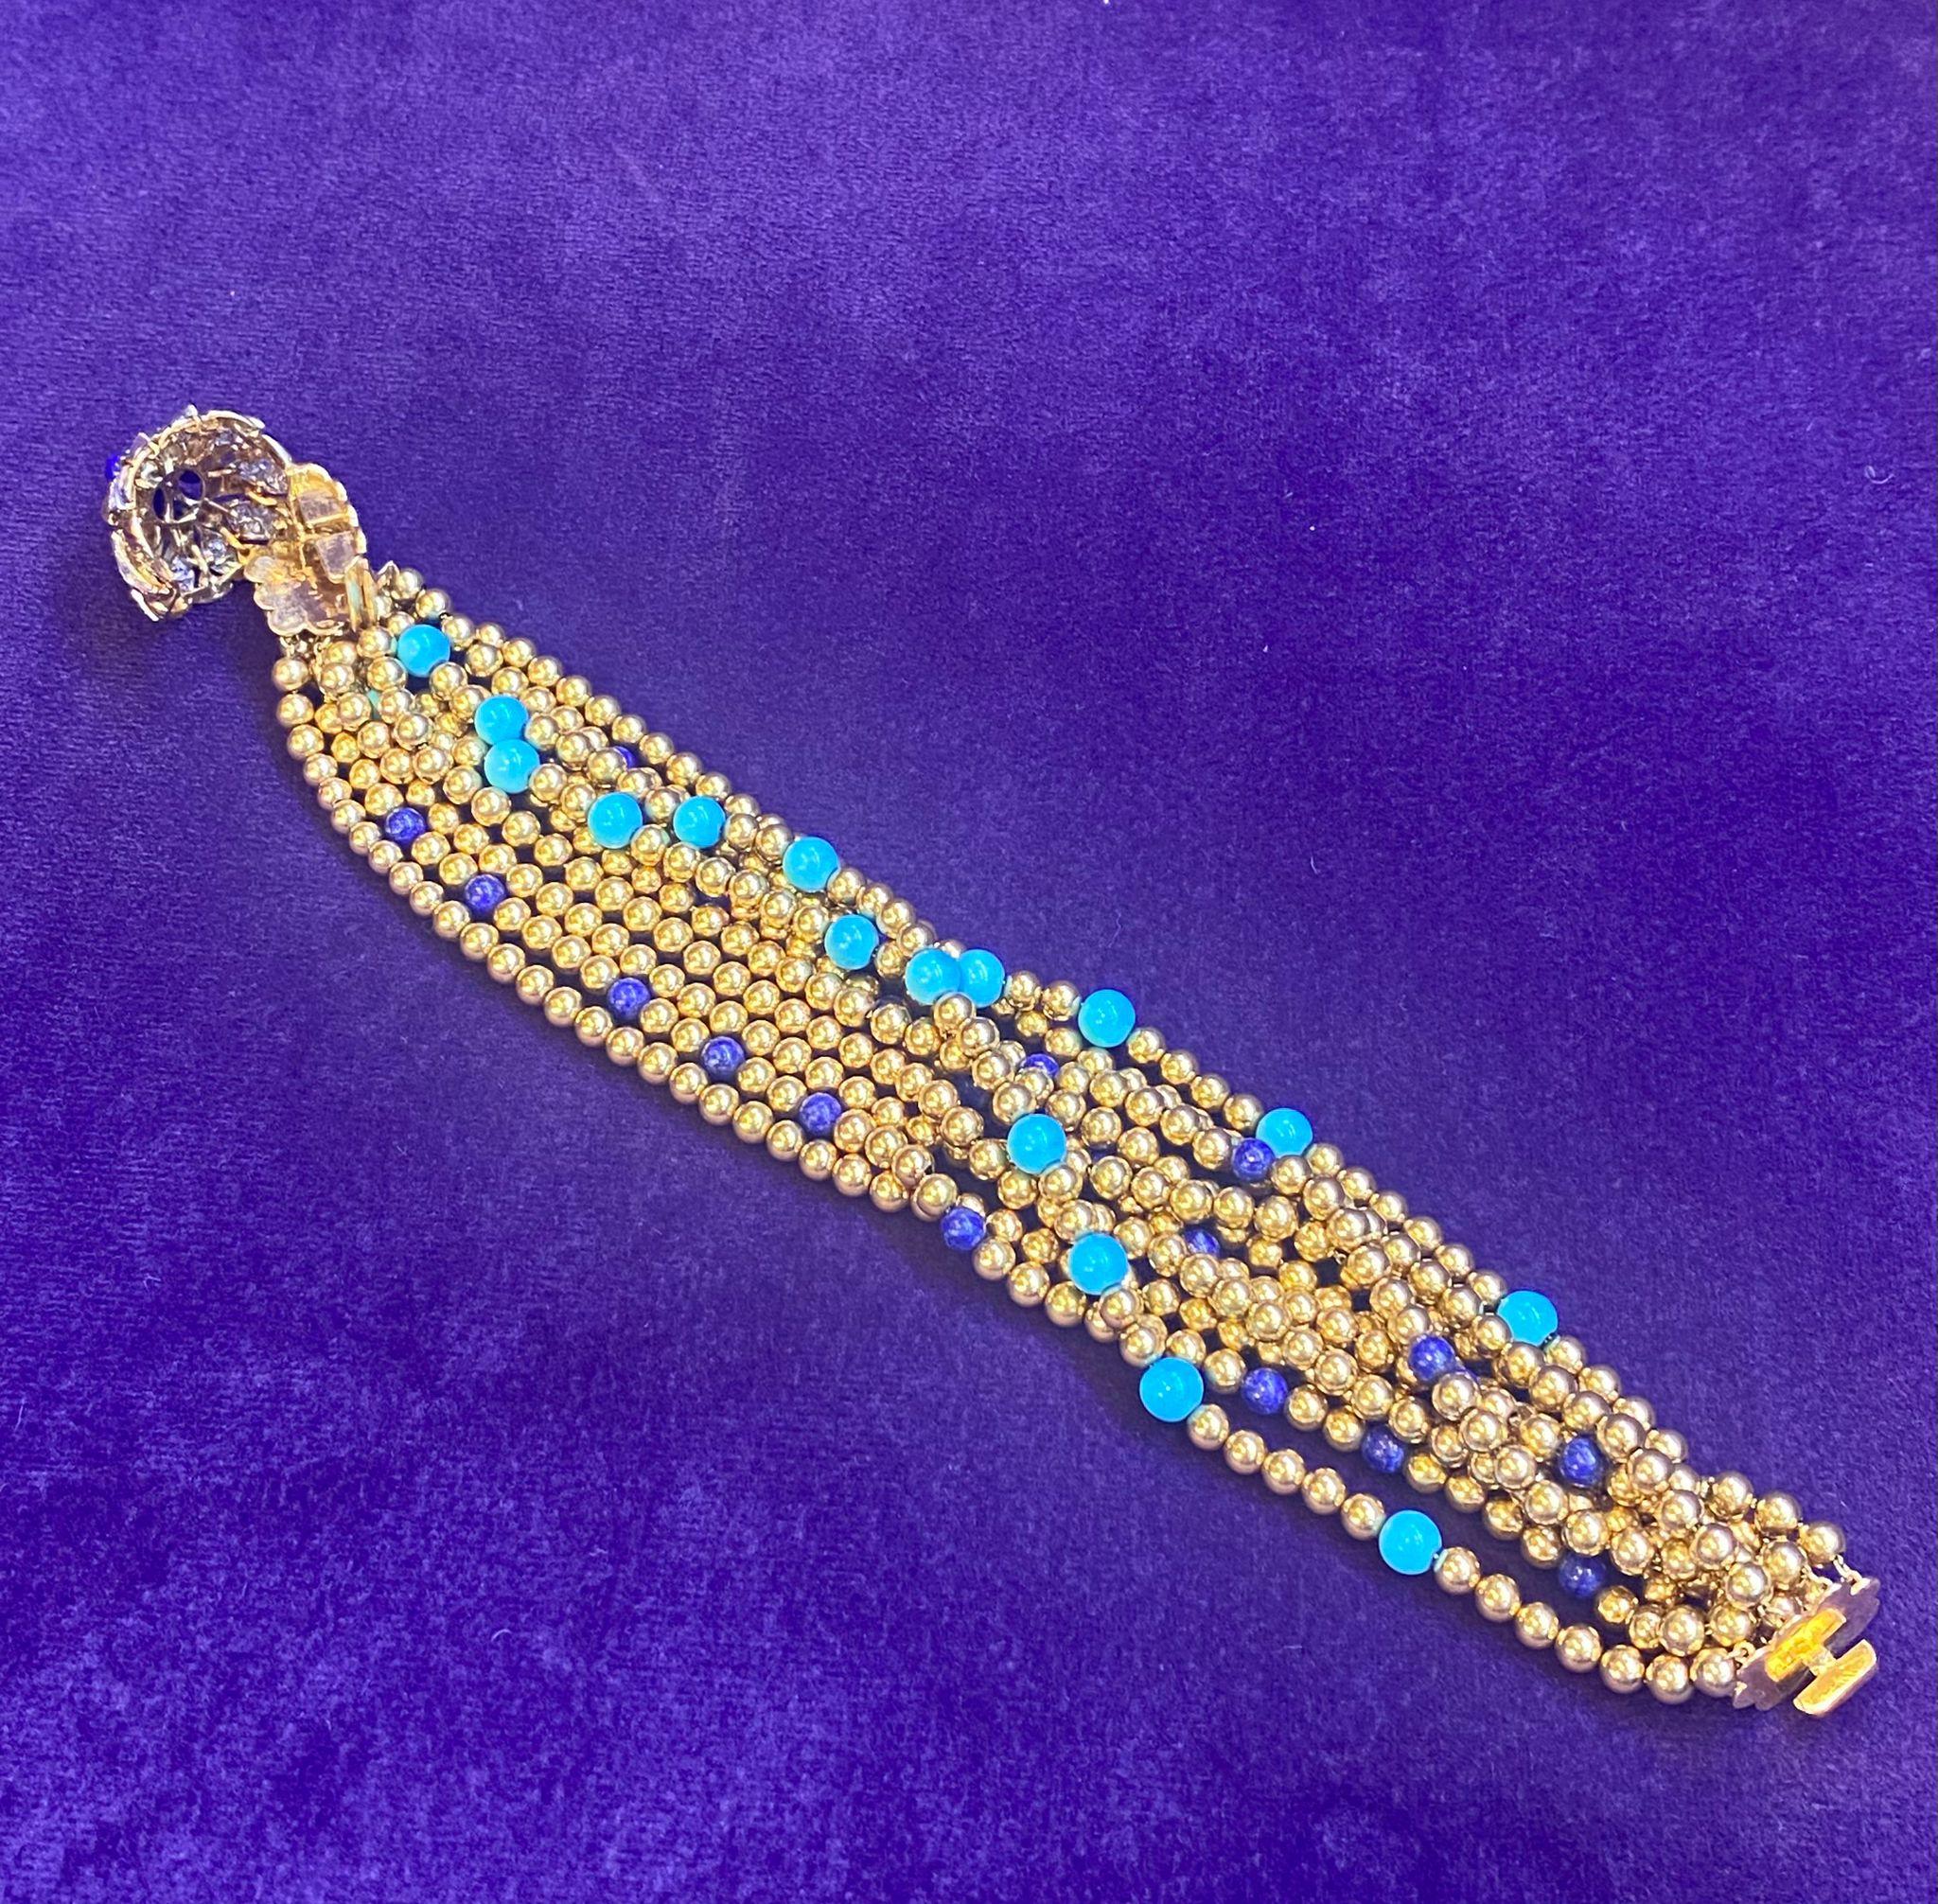 Van Cleef & Arpels Lapis Lazuli & Turquoise Torsade Bracelet For Sale 5